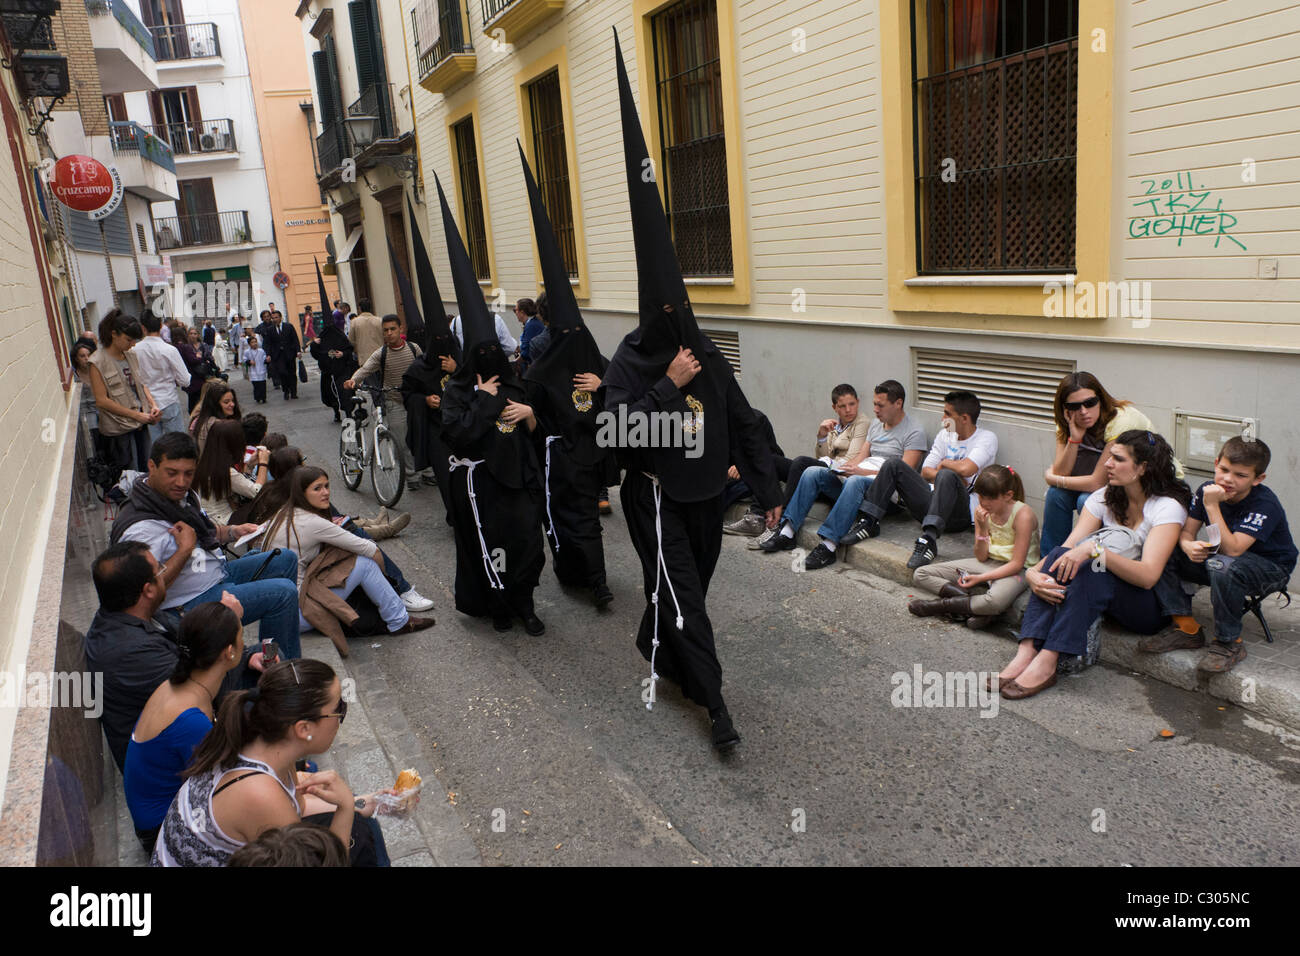 Hooded penitents (Nazarenos) during Seville's annual Easter Holy Week (Semana Santa de Sevilla) Stock Photo